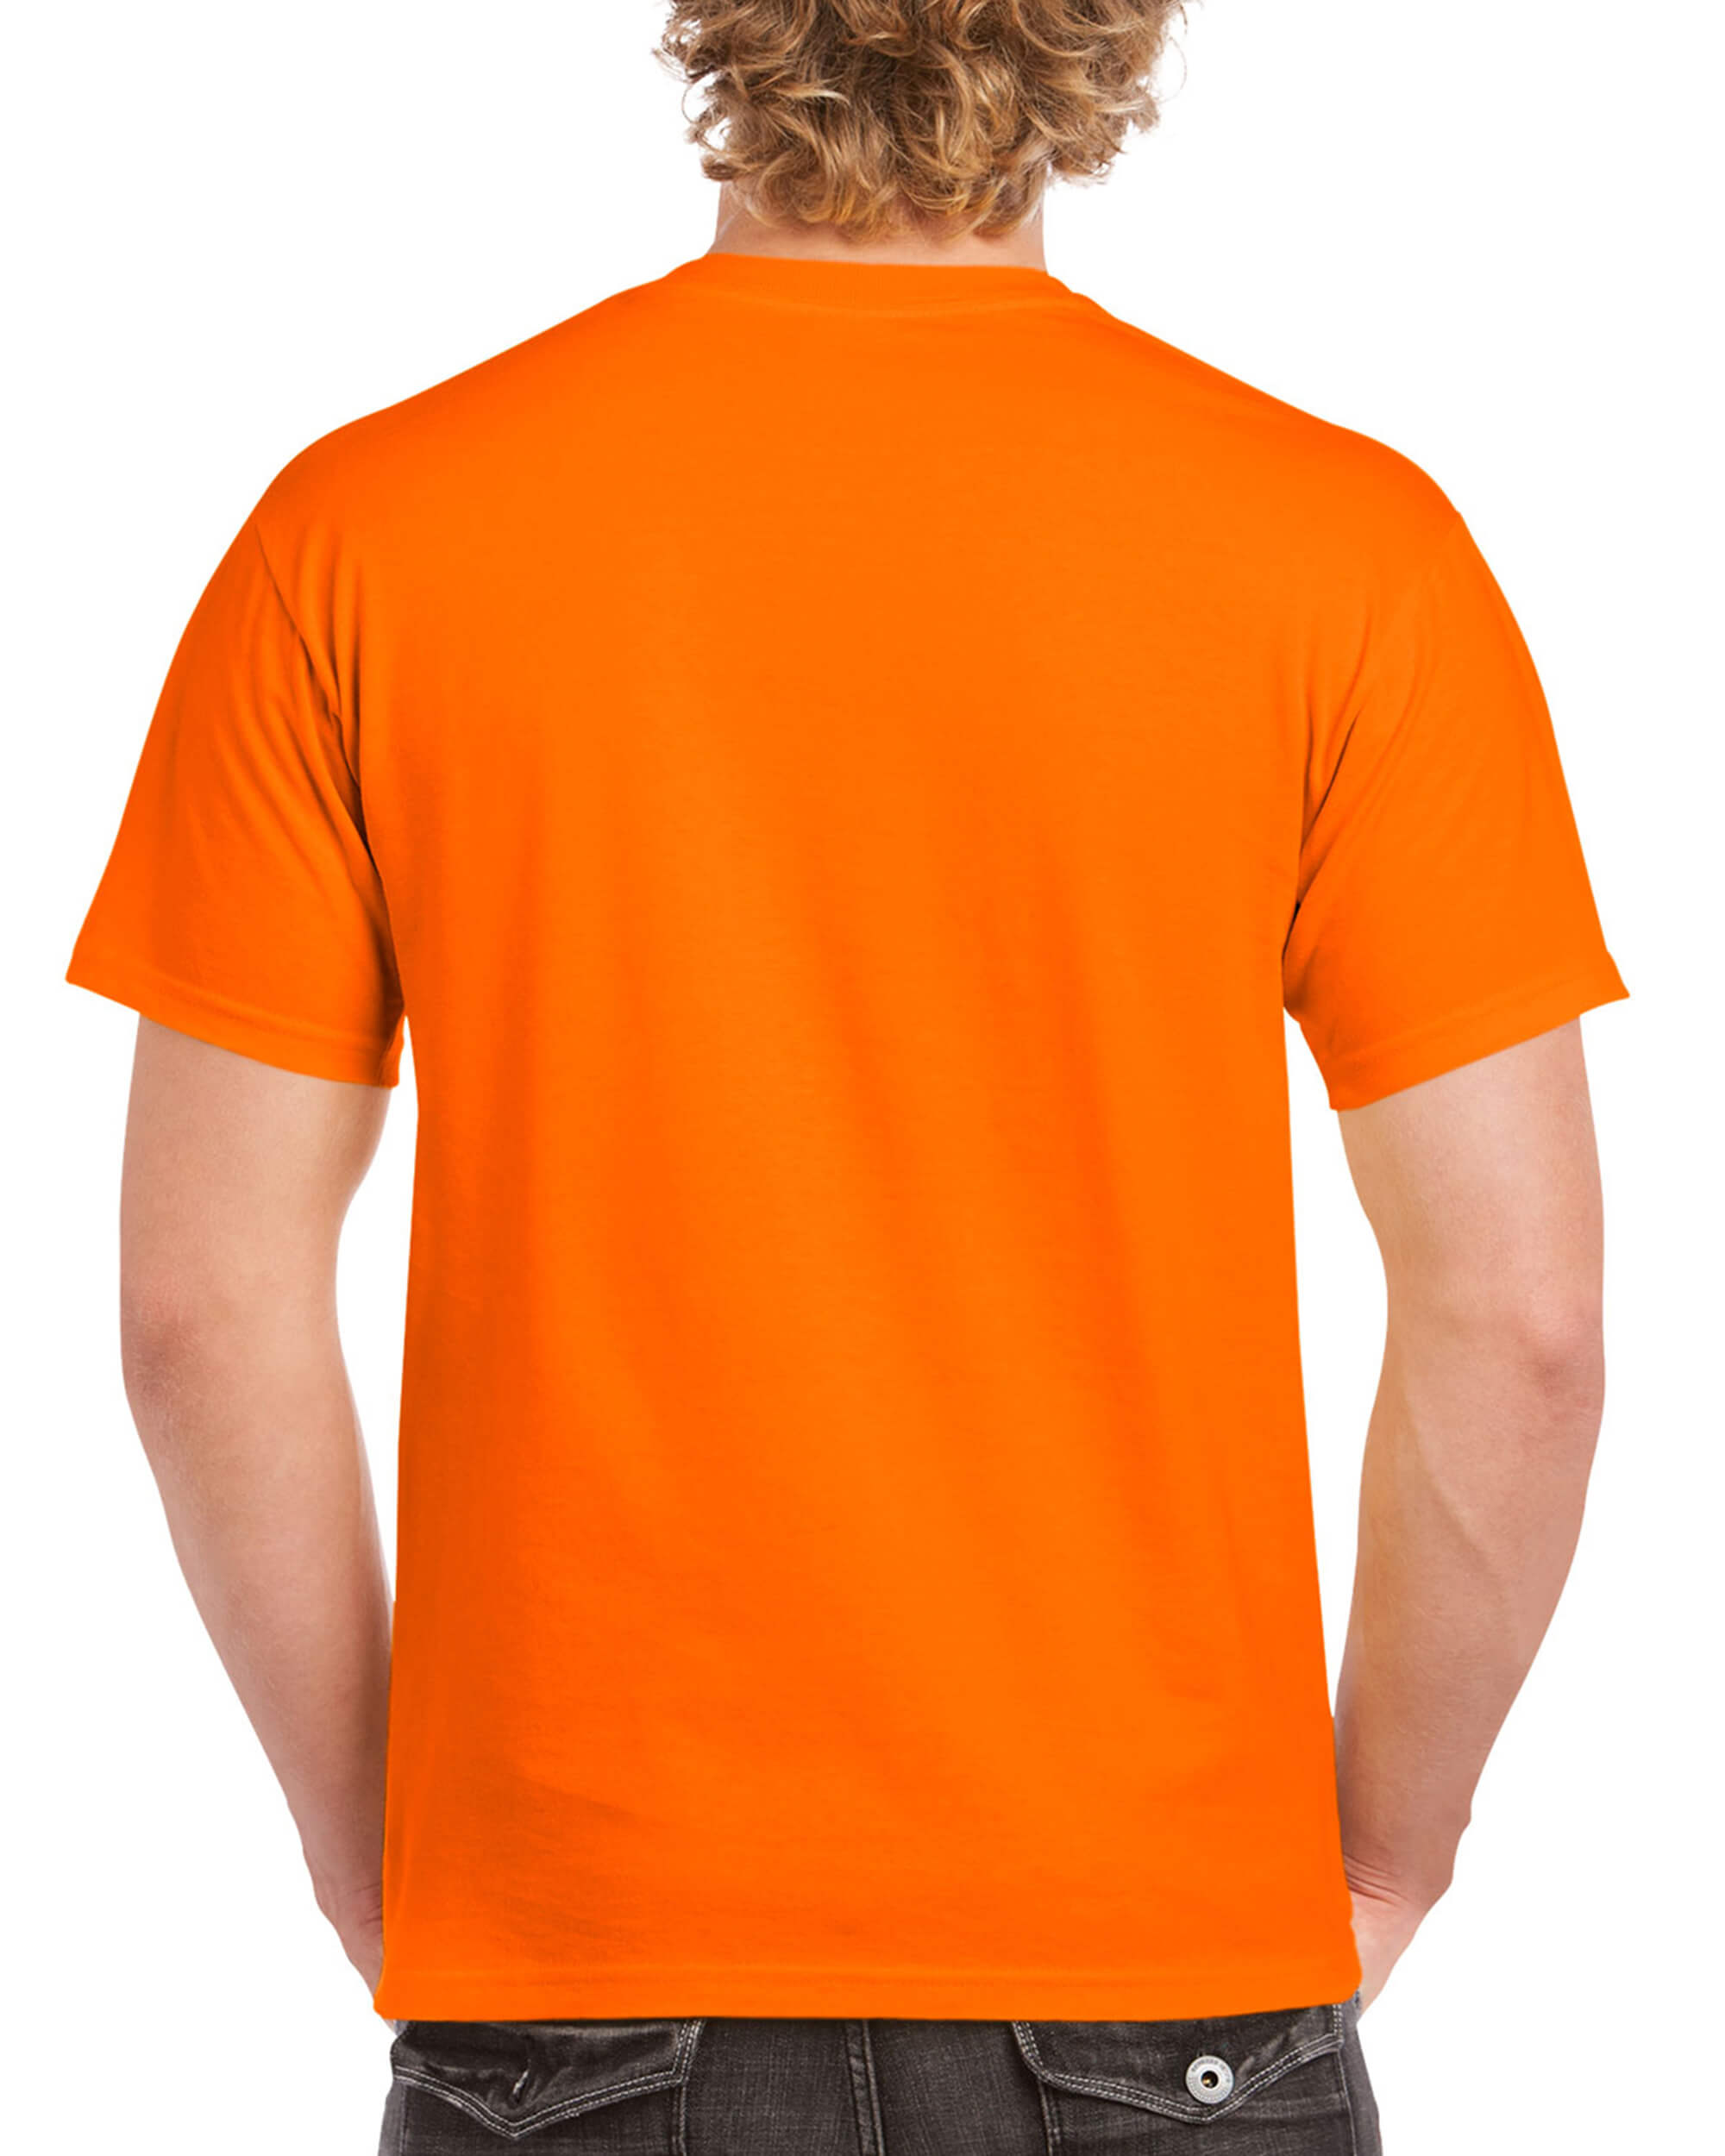 T-Shirt - Safety Orange